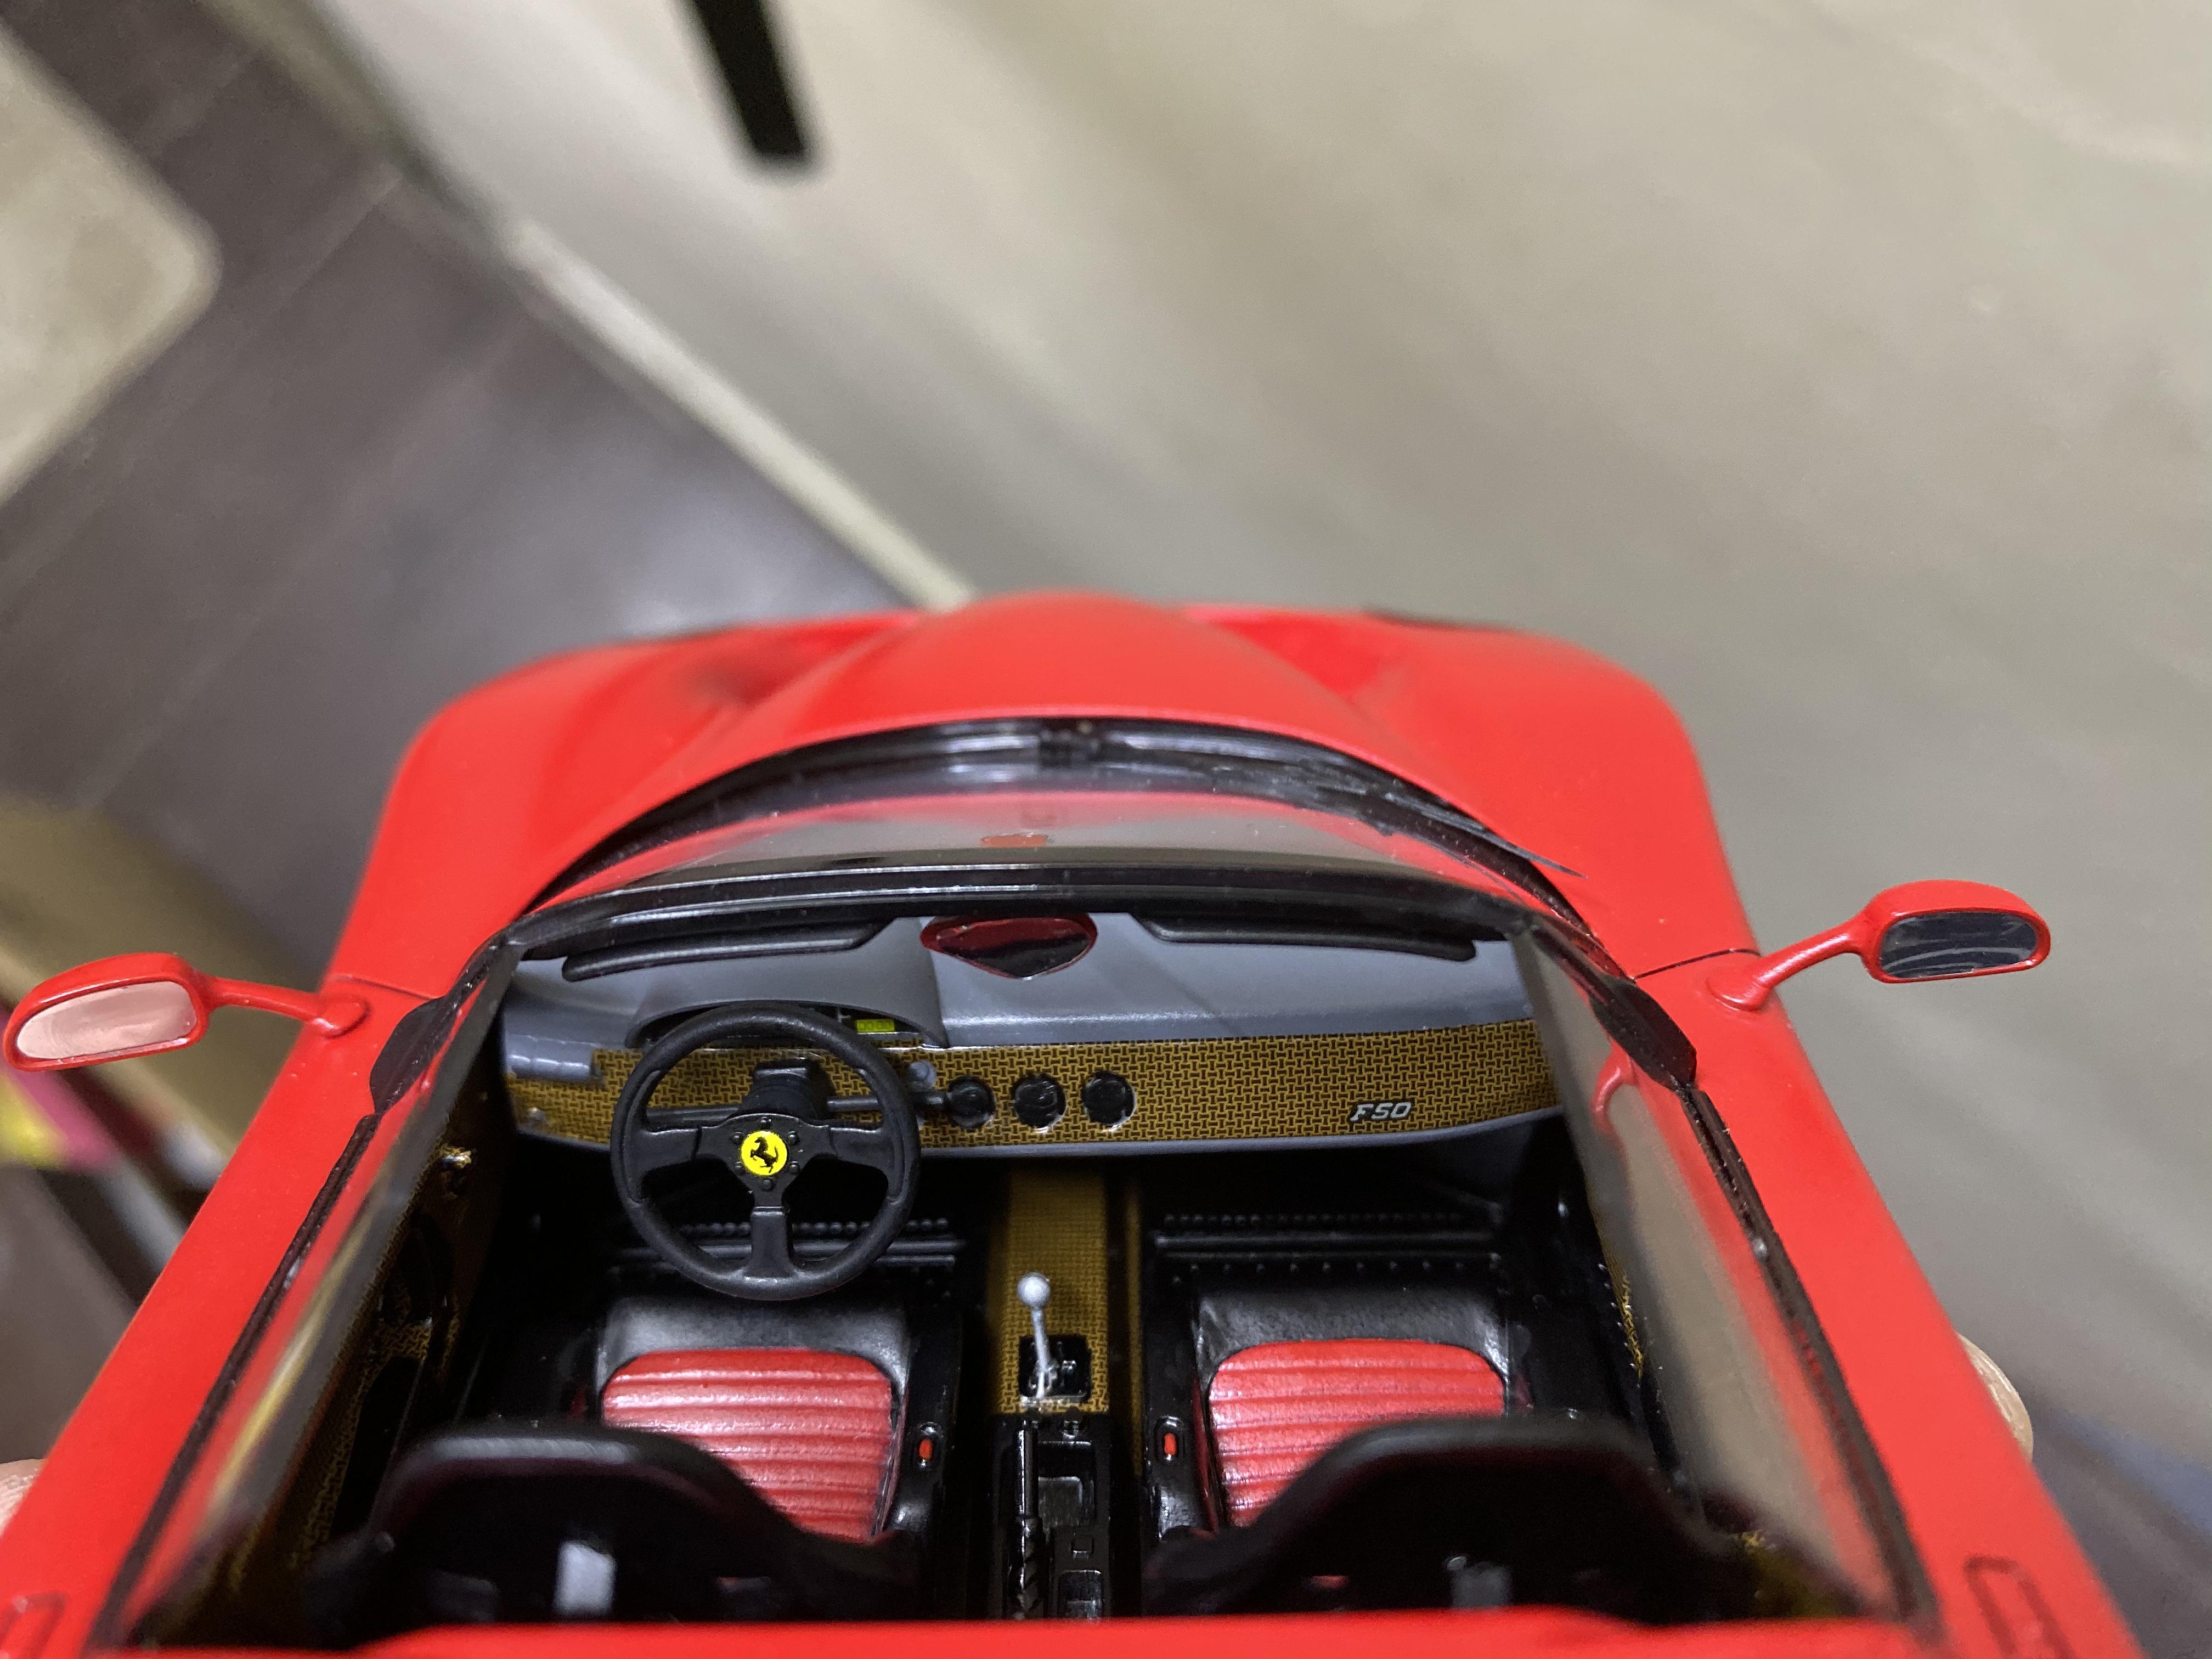 1/24 Tamiya Ferrari F50 - Model Cars - Model Cars Magazine Forum